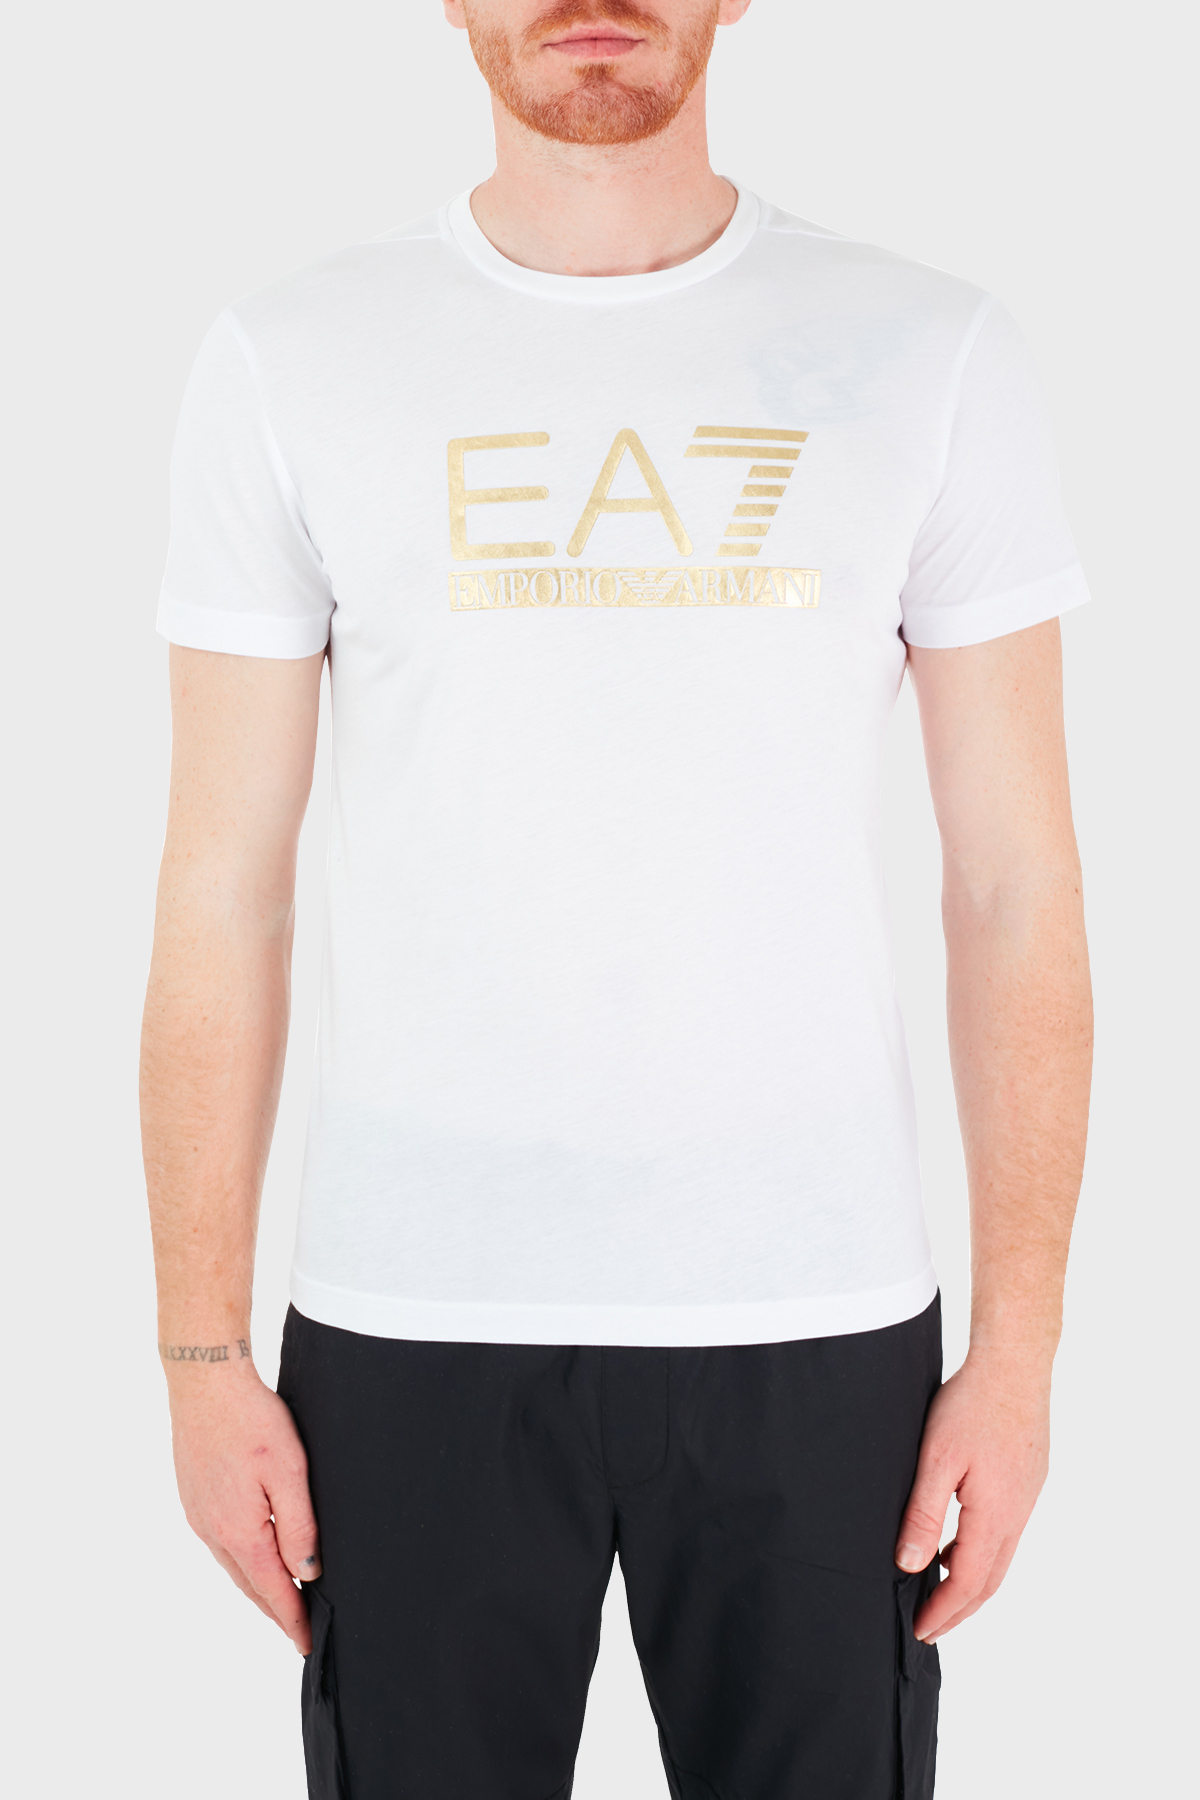 EA7 Logo Baskılı Bisiklet Yaka % 100 Pamuk Erkek T Shirt 3KPT87 PJM9Z 1100 BEYAZ